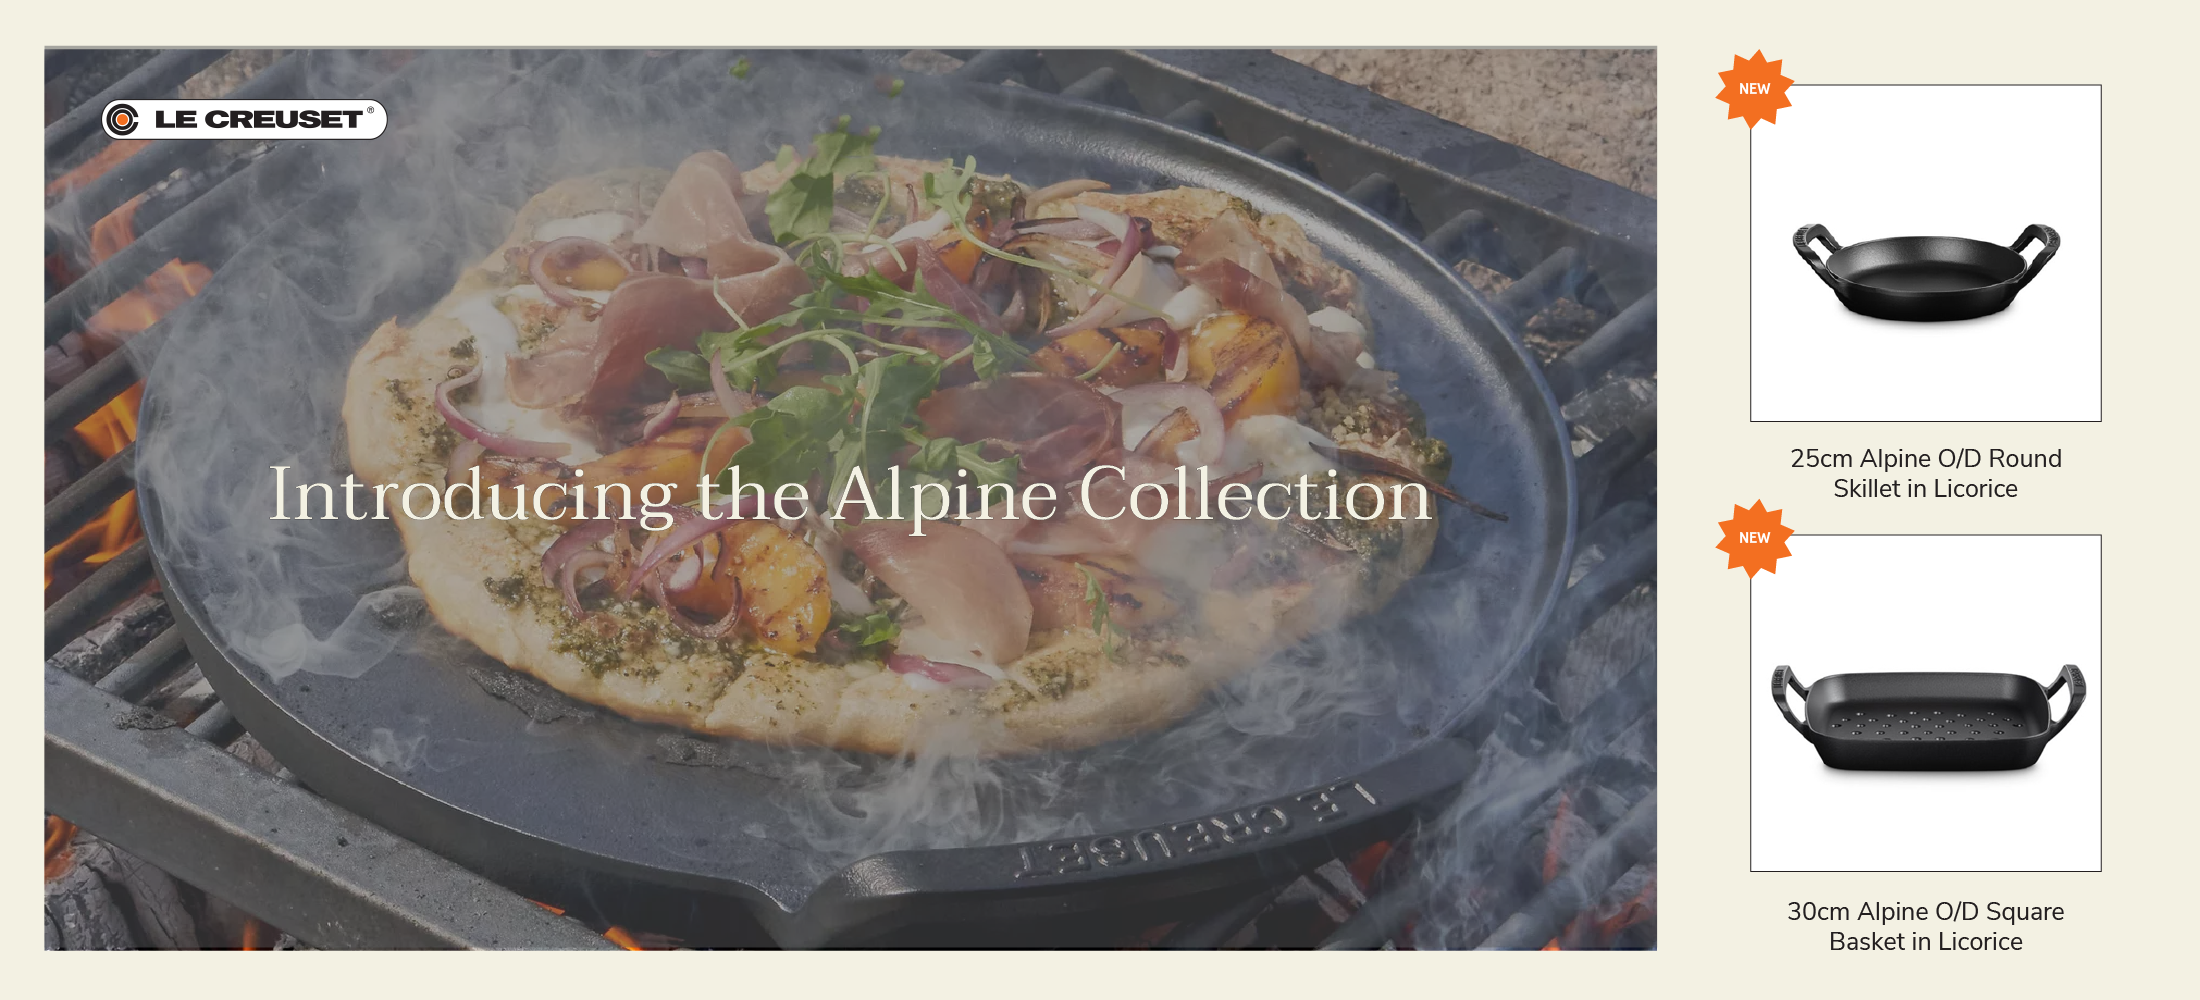 New Alpine Collection